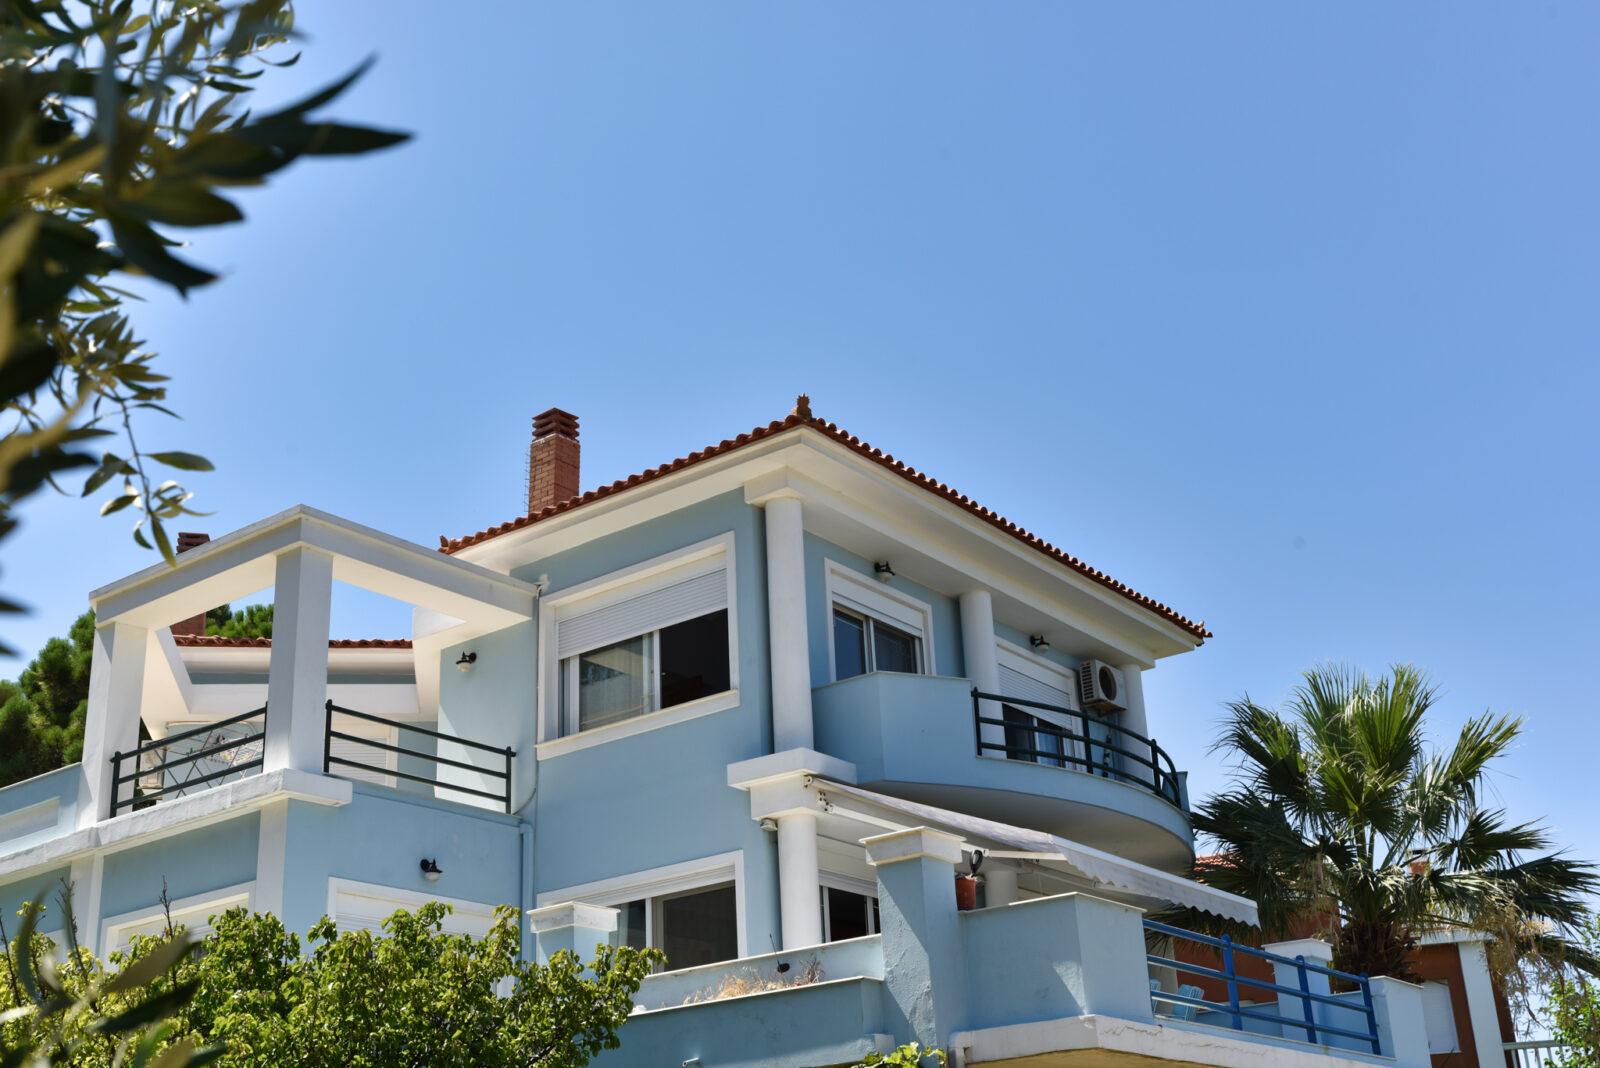 BEACH FRONT HOUSE FOR SALE IN MYTILENE, GREECE